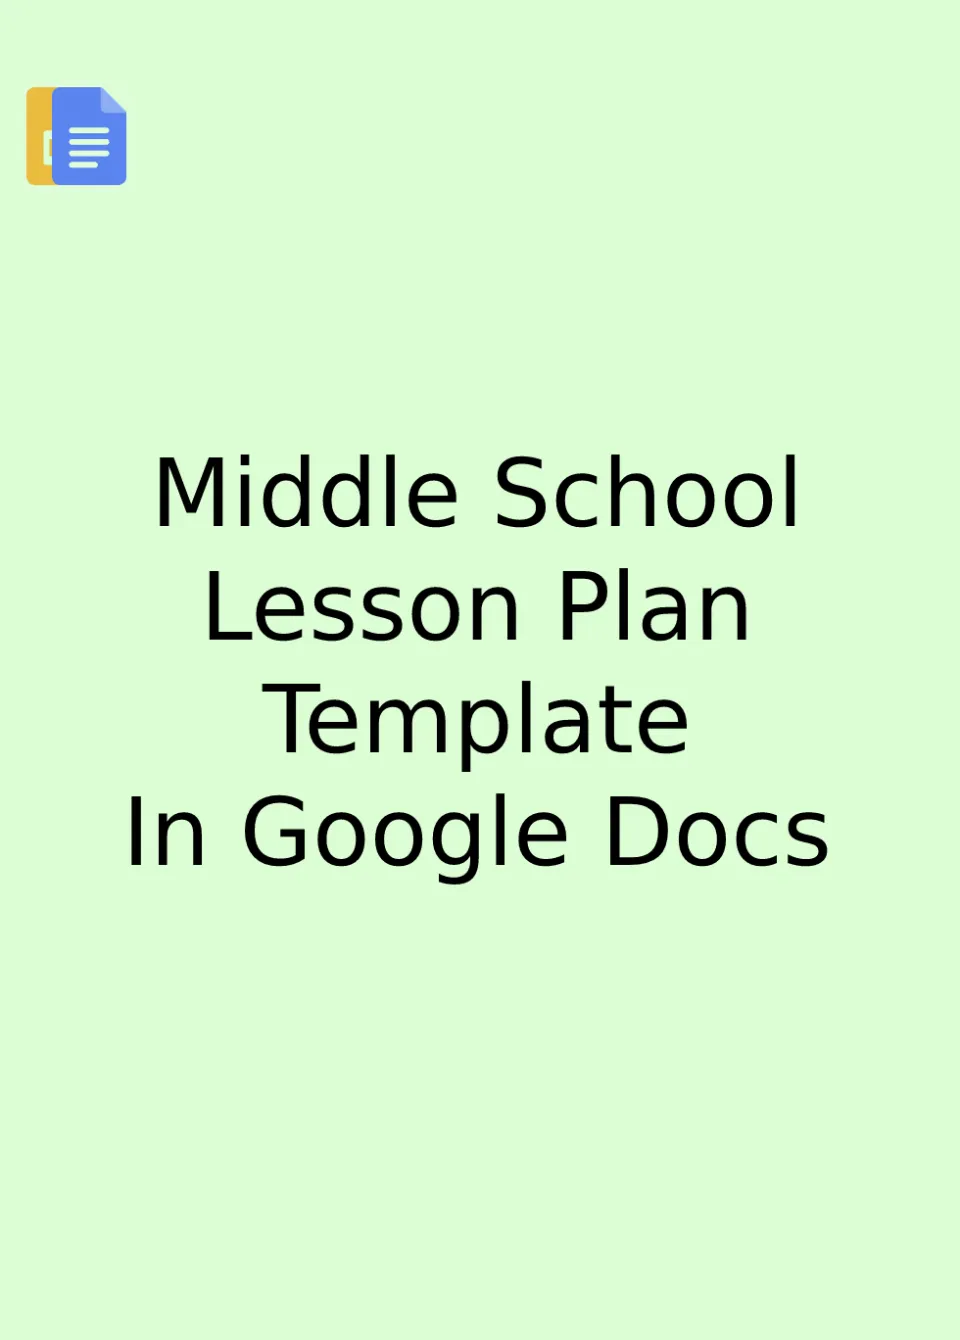 Middle School Lesson Plan Template Google Docs